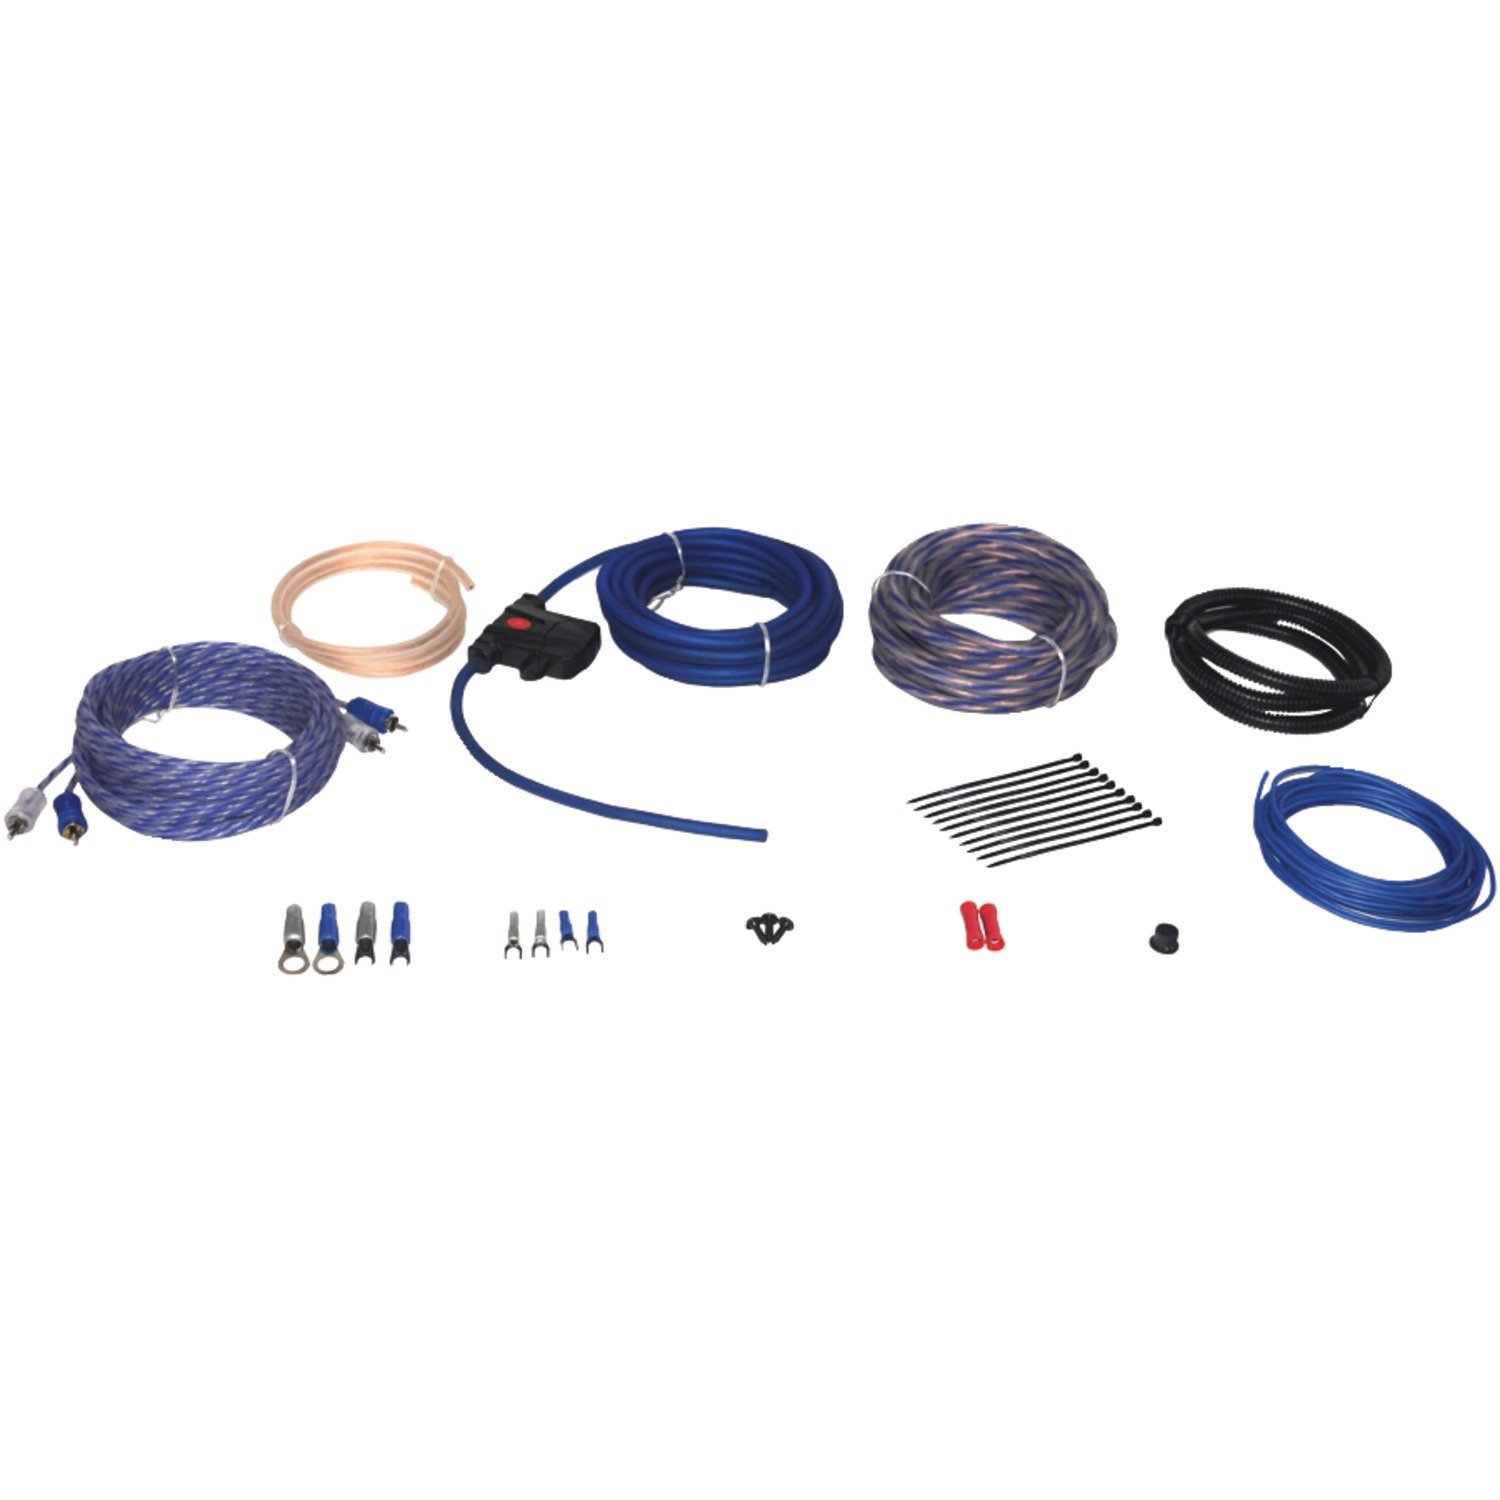 Qfx AKIT8 1300 Watt Complete Amplifier Hookup Kit Includes